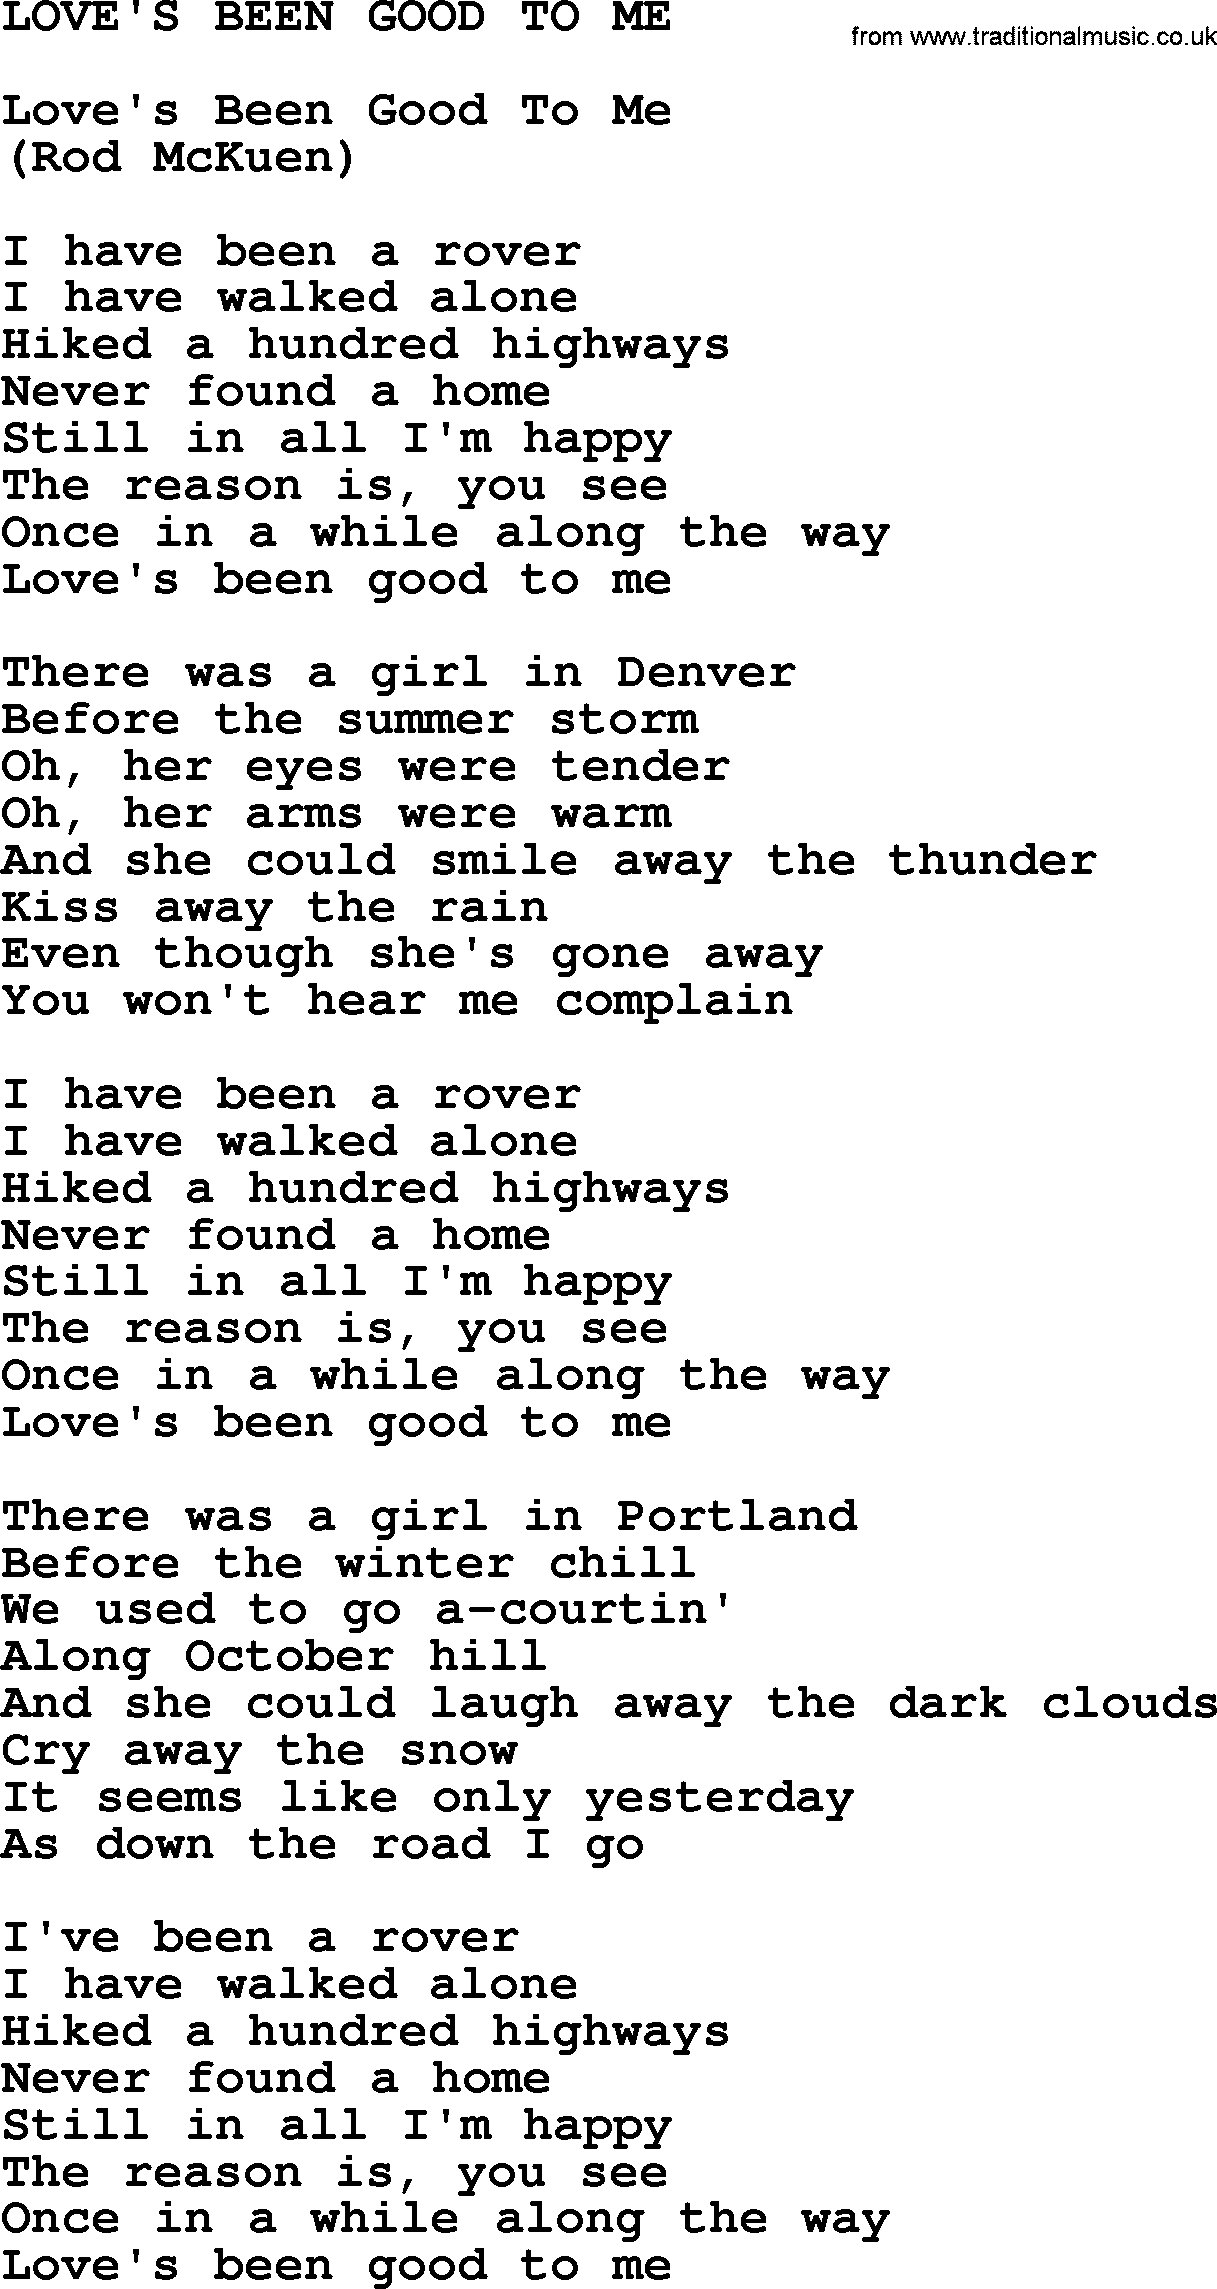 Johnny Cash song Love's Been Good To Me.txt lyrics